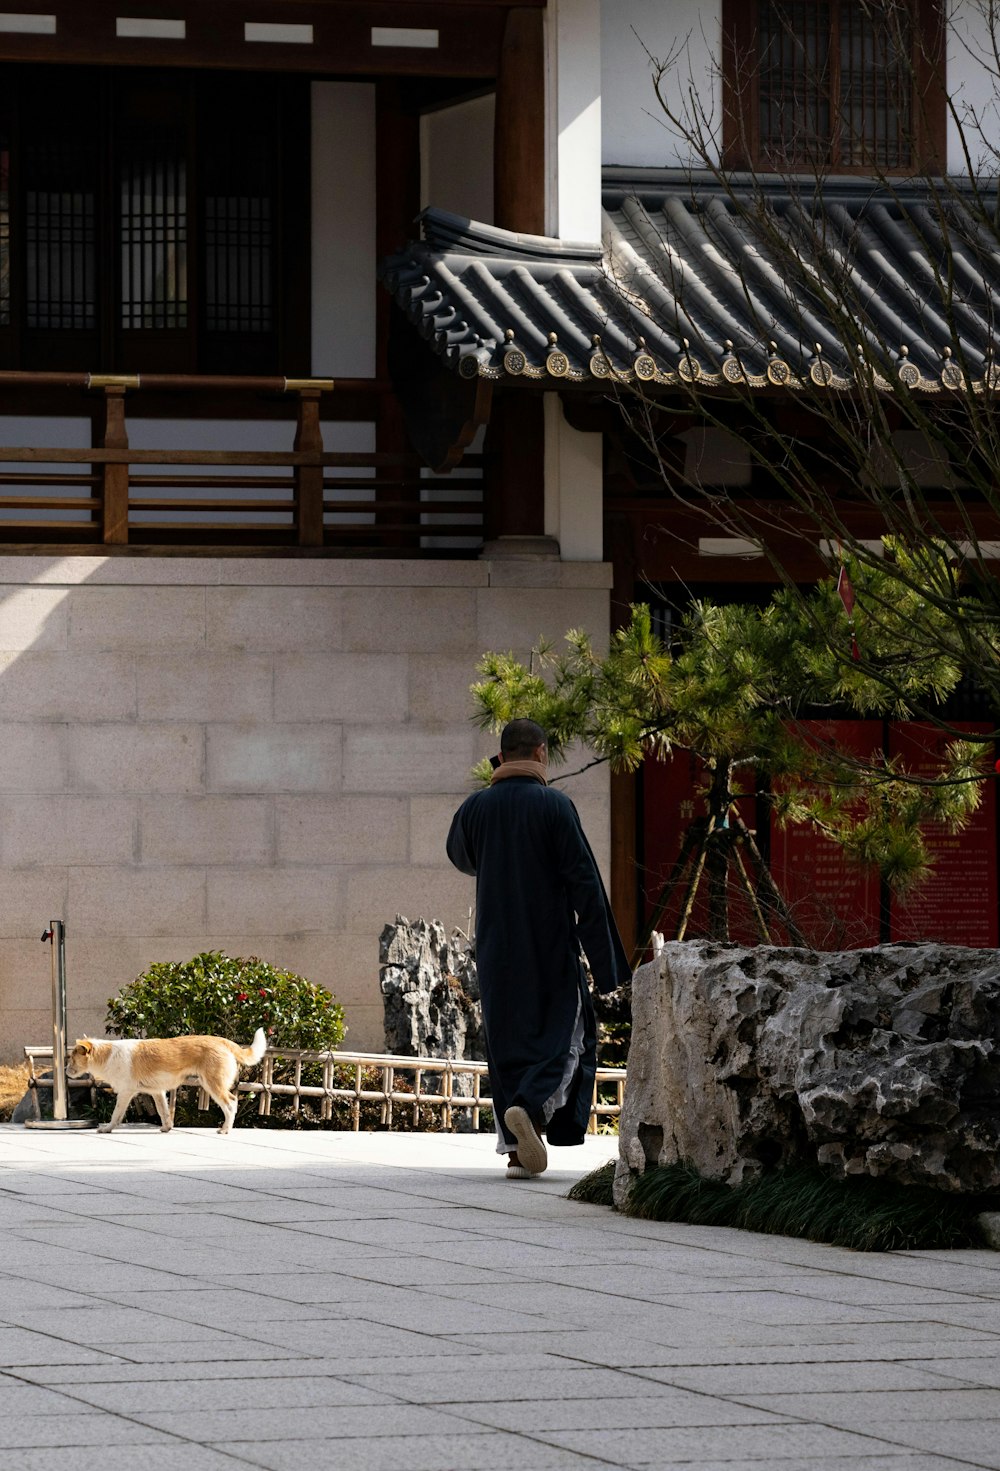 a man walking a dog in a courtyard